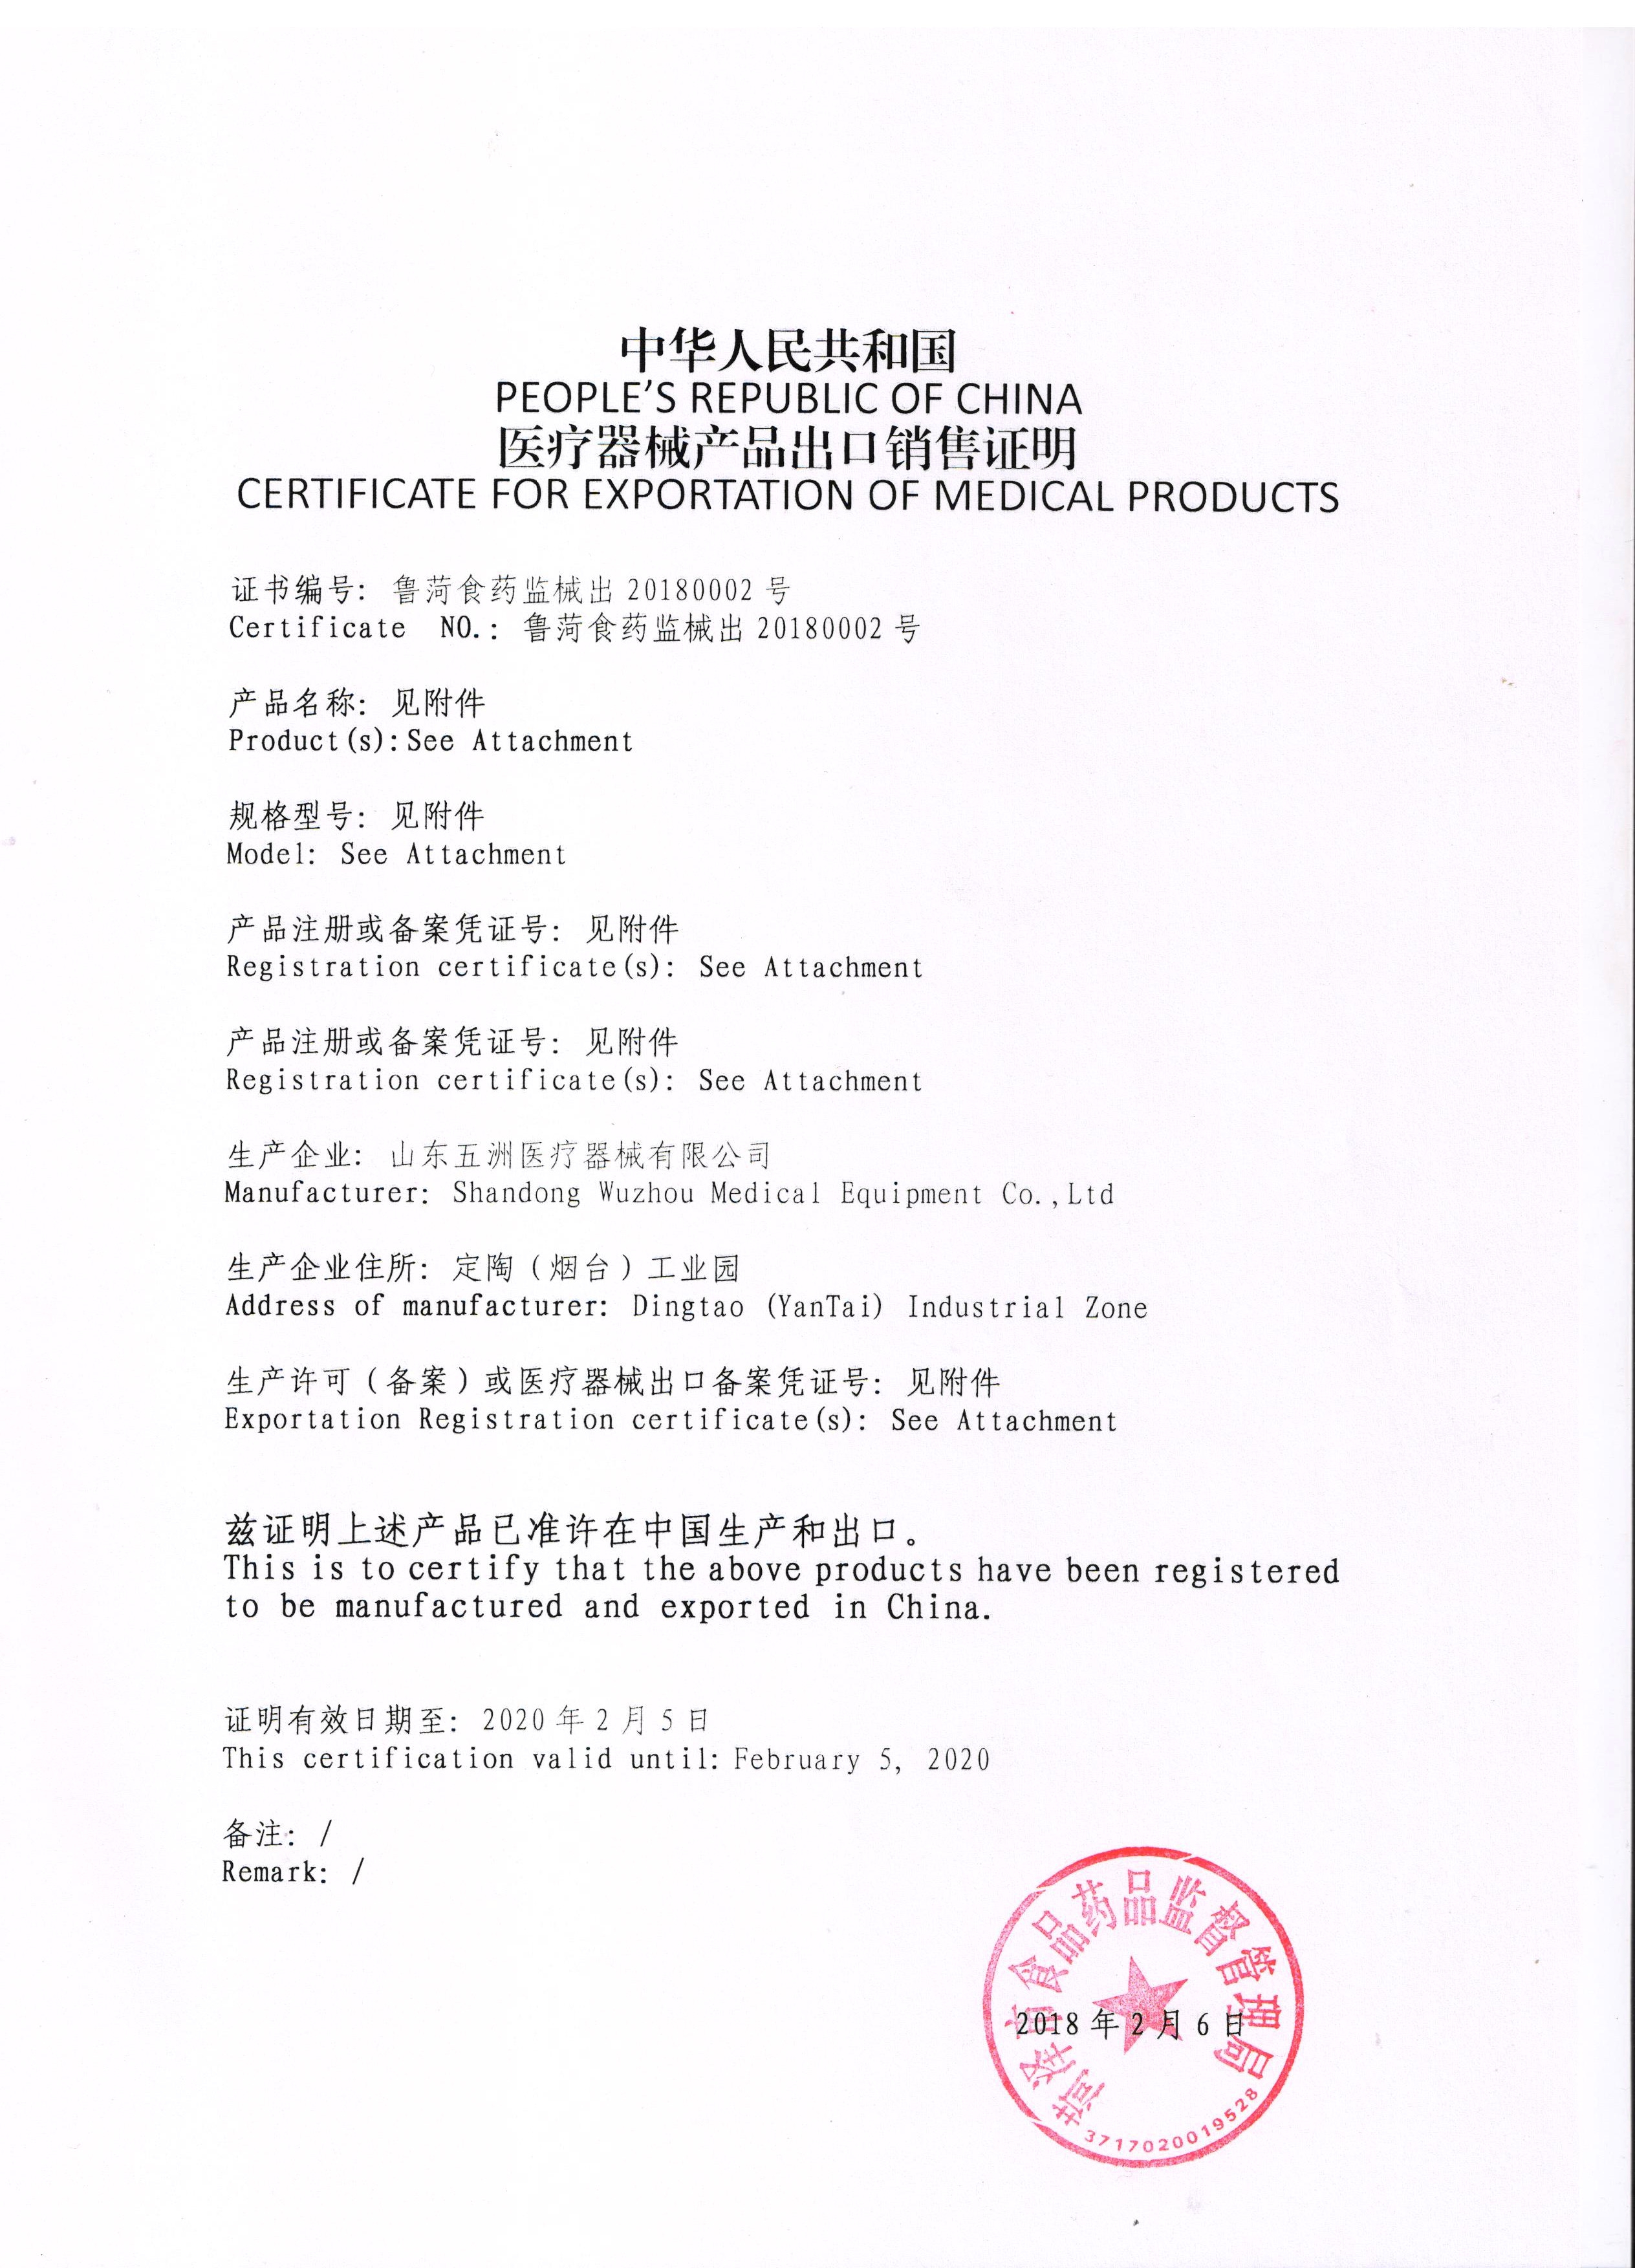 China Export Sales Certificate